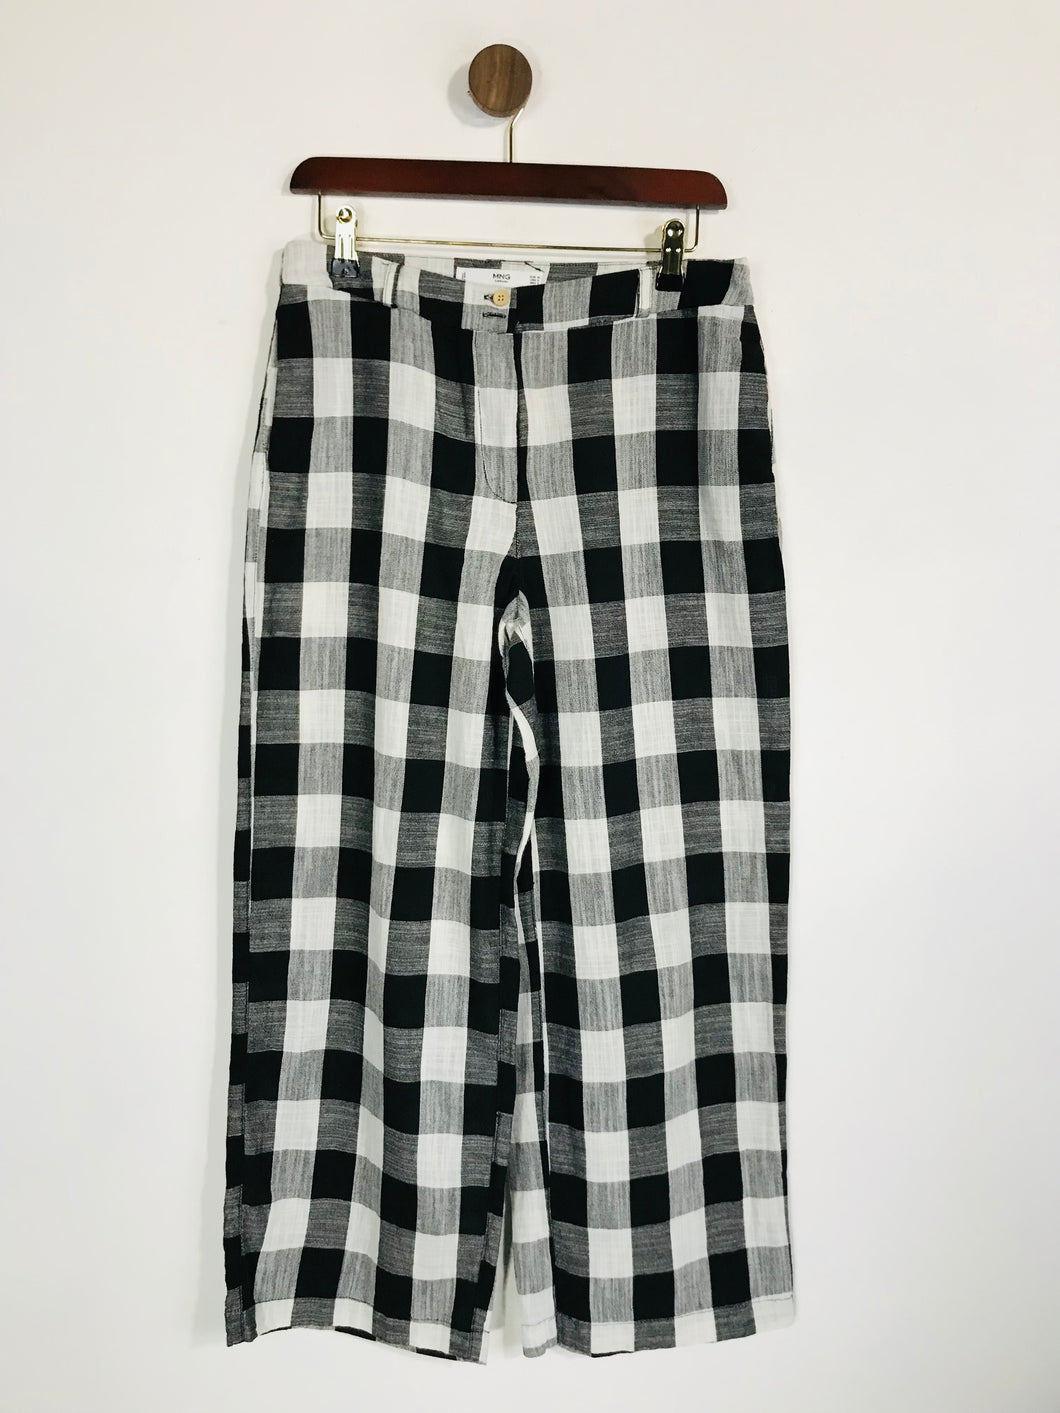 Mango Women's Cotton Check Gingham Casual Trousers | 38 UK10 | Black